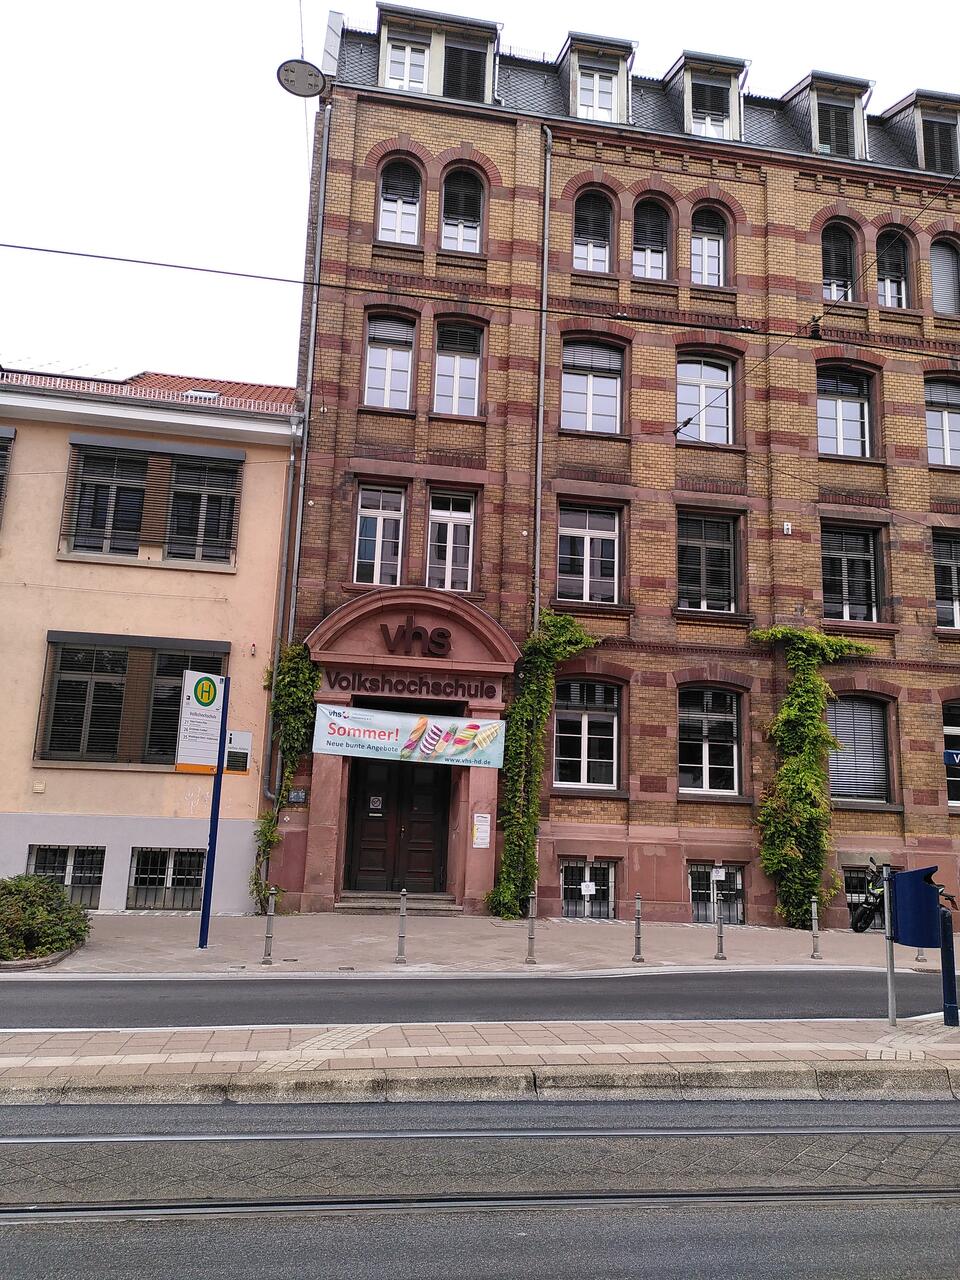 2023 Volkshochschule Heidelberg 04 Eingangsbereich.jpg